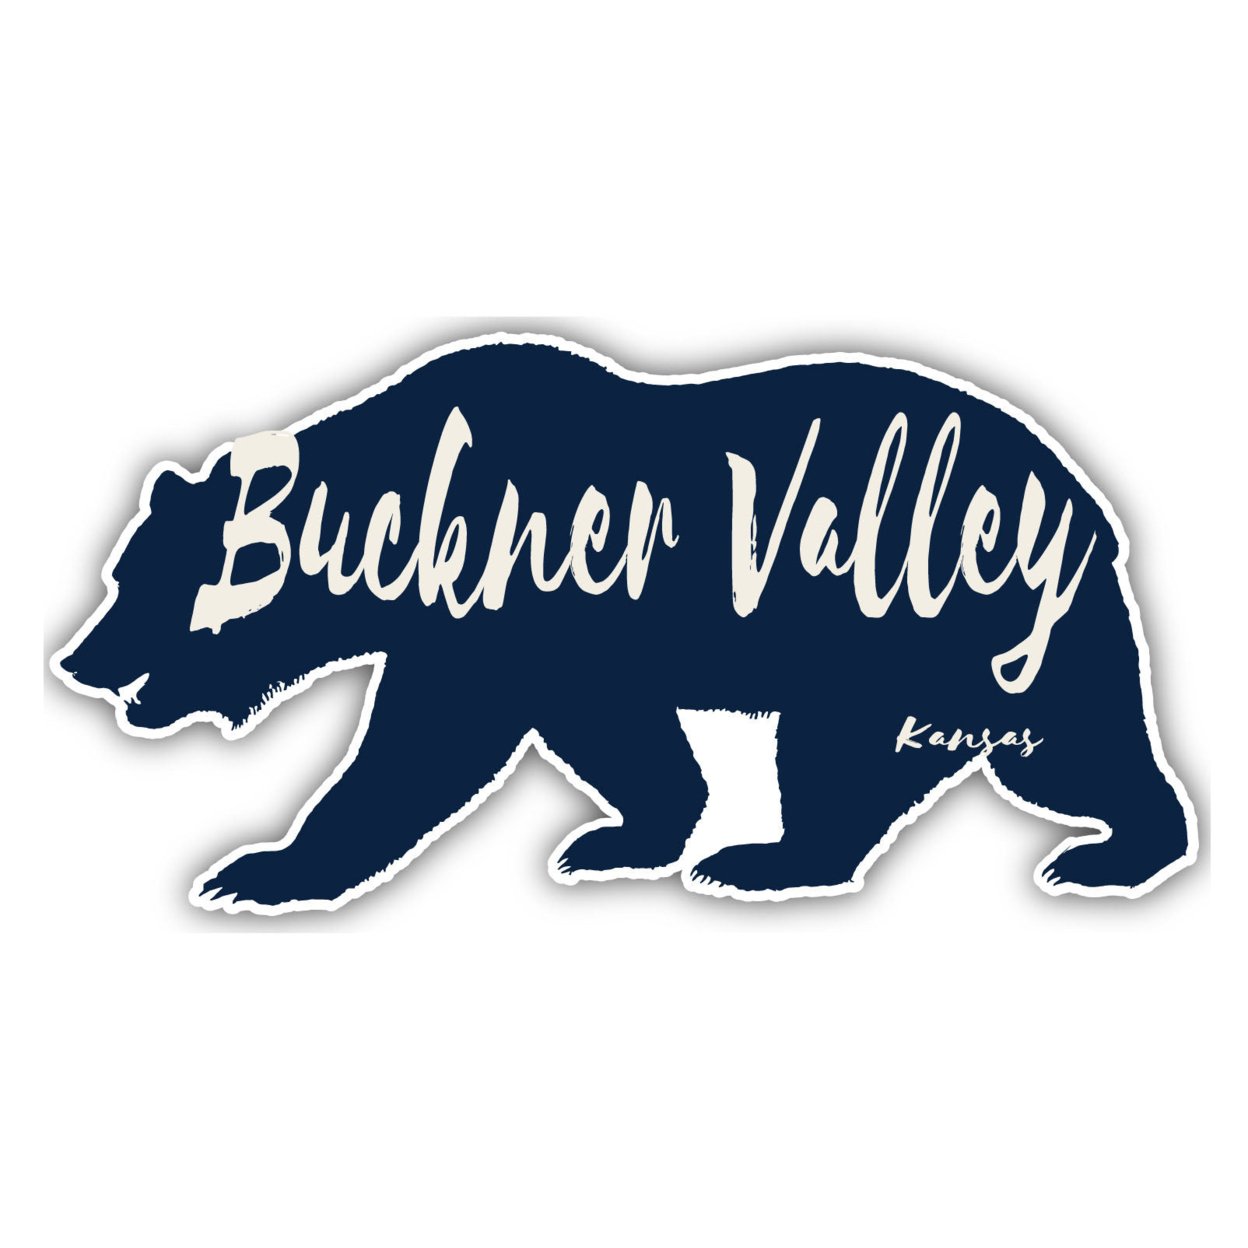 Buckner Valley Kansas Souvenir Decorative Stickers (Choose Theme And Size) - Single Unit, 8-Inch, Bear